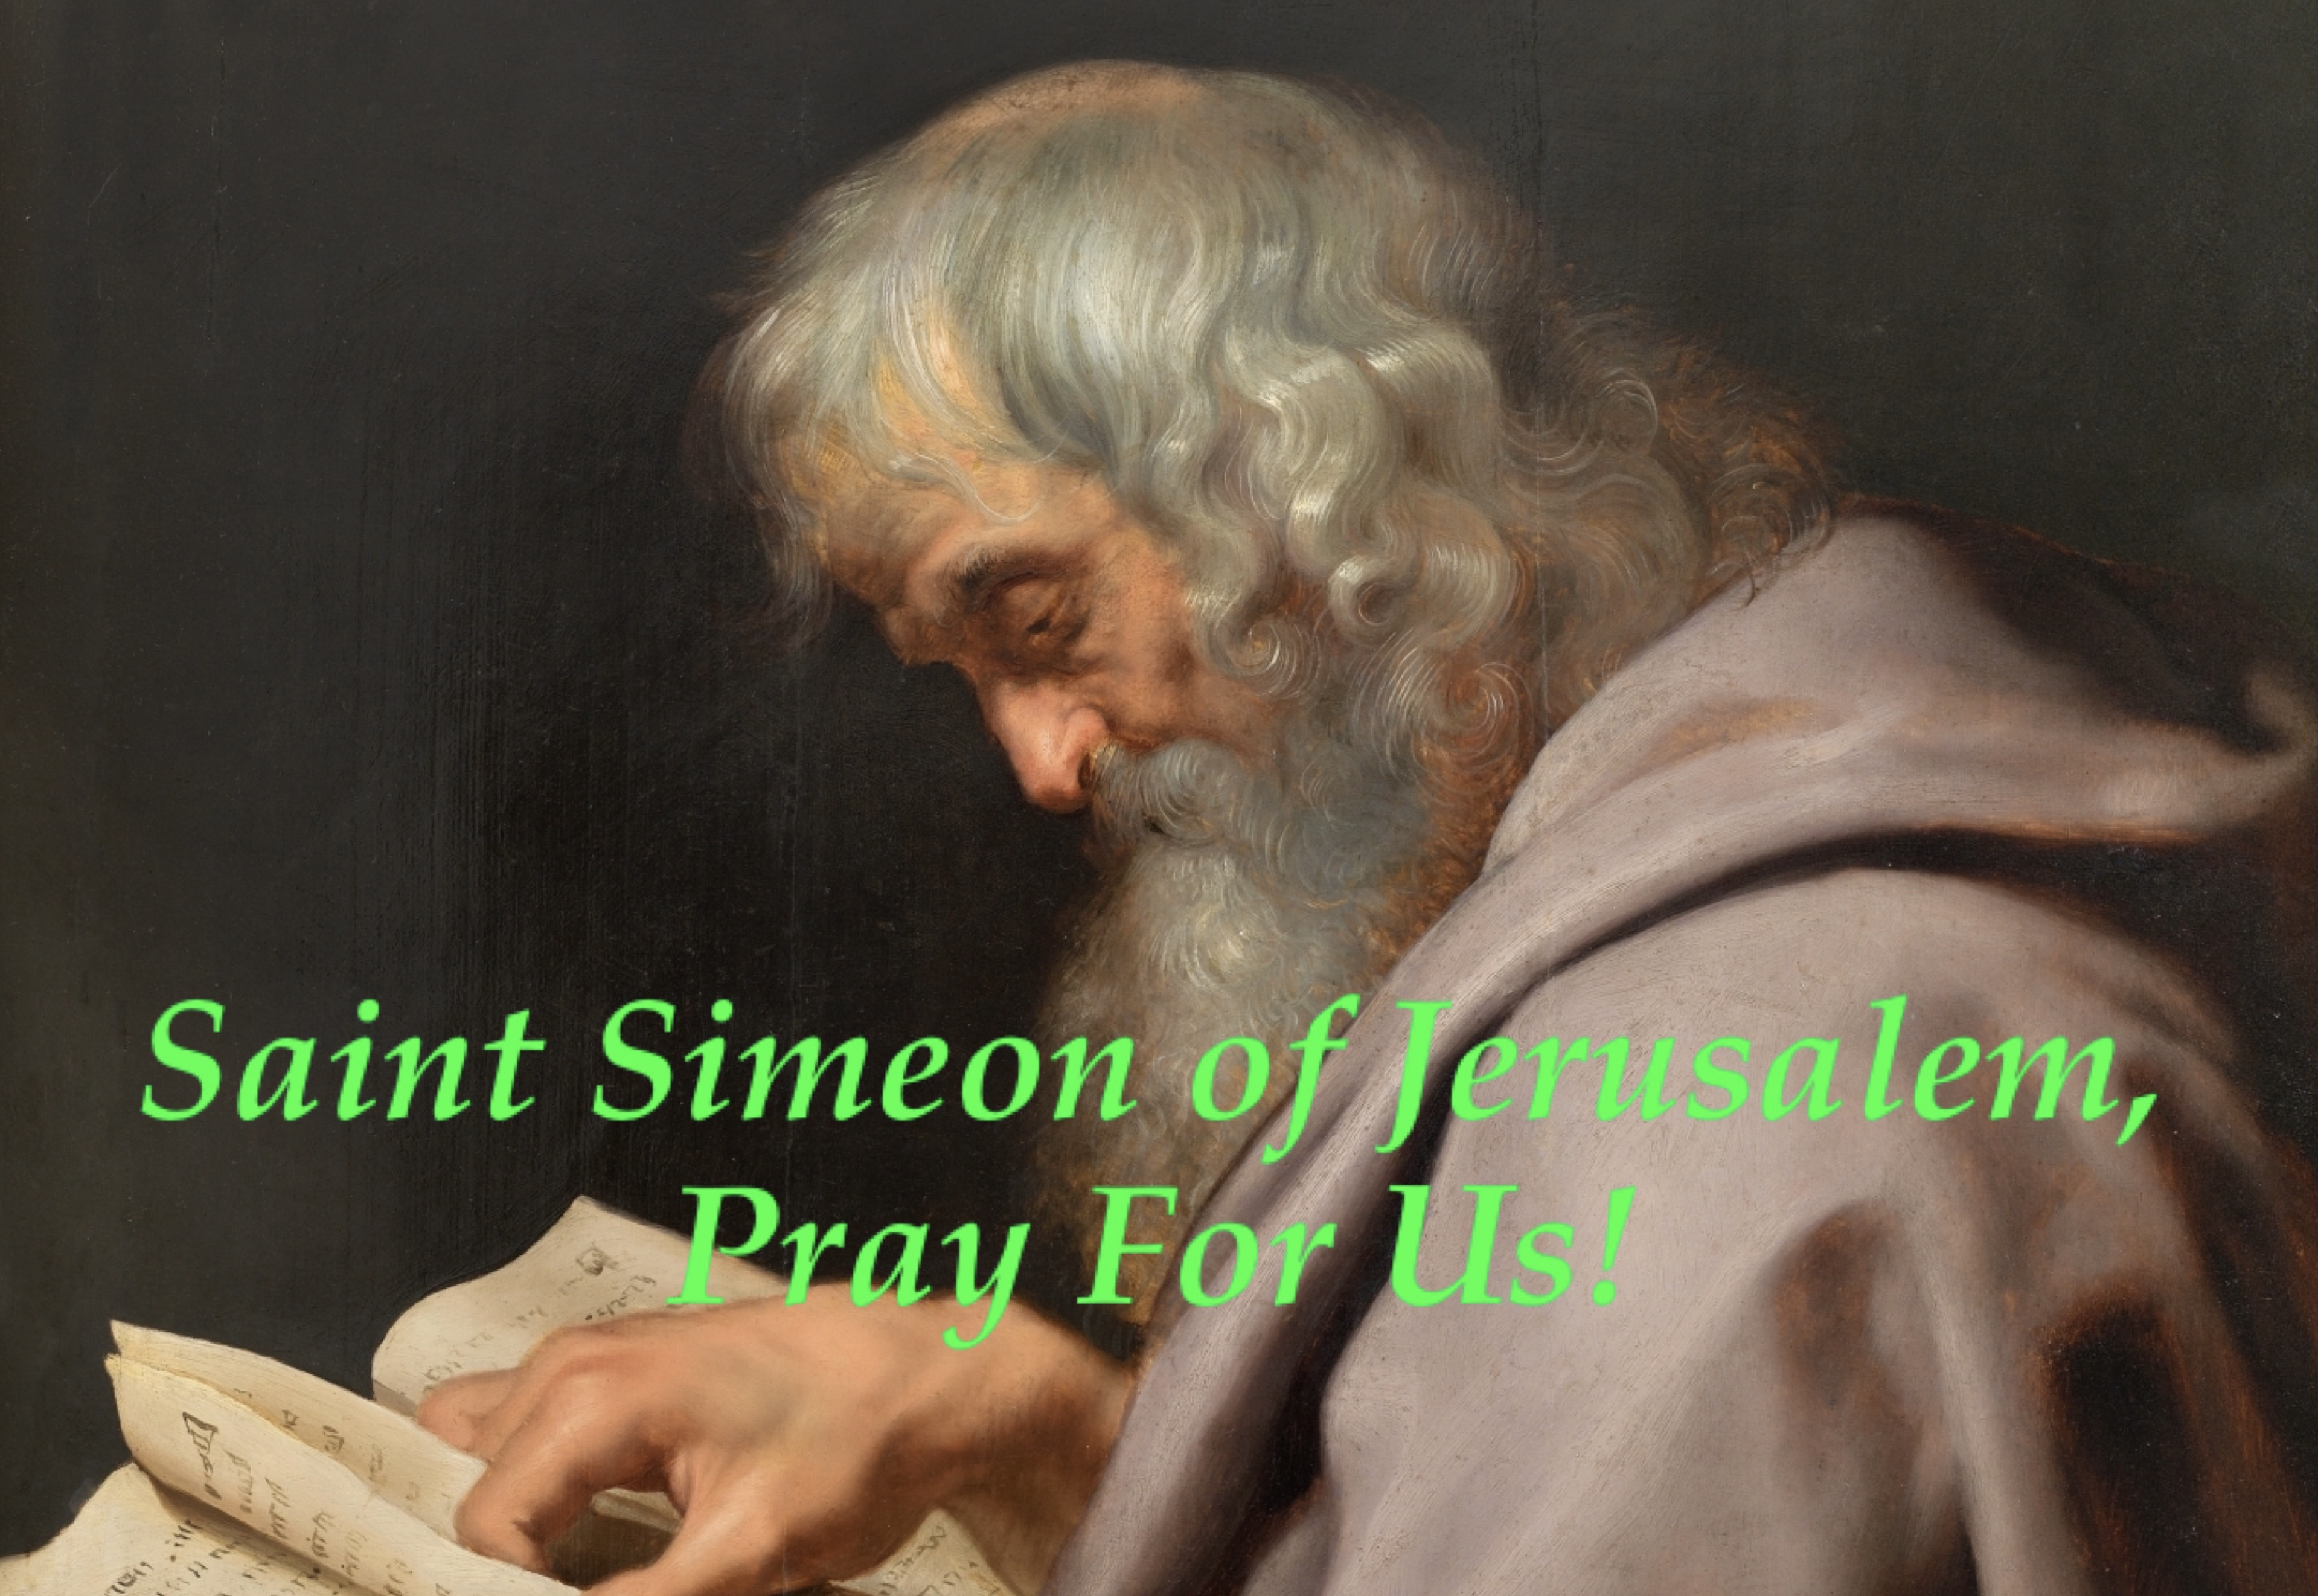 18th February - Saint Simeon of Jerusalem